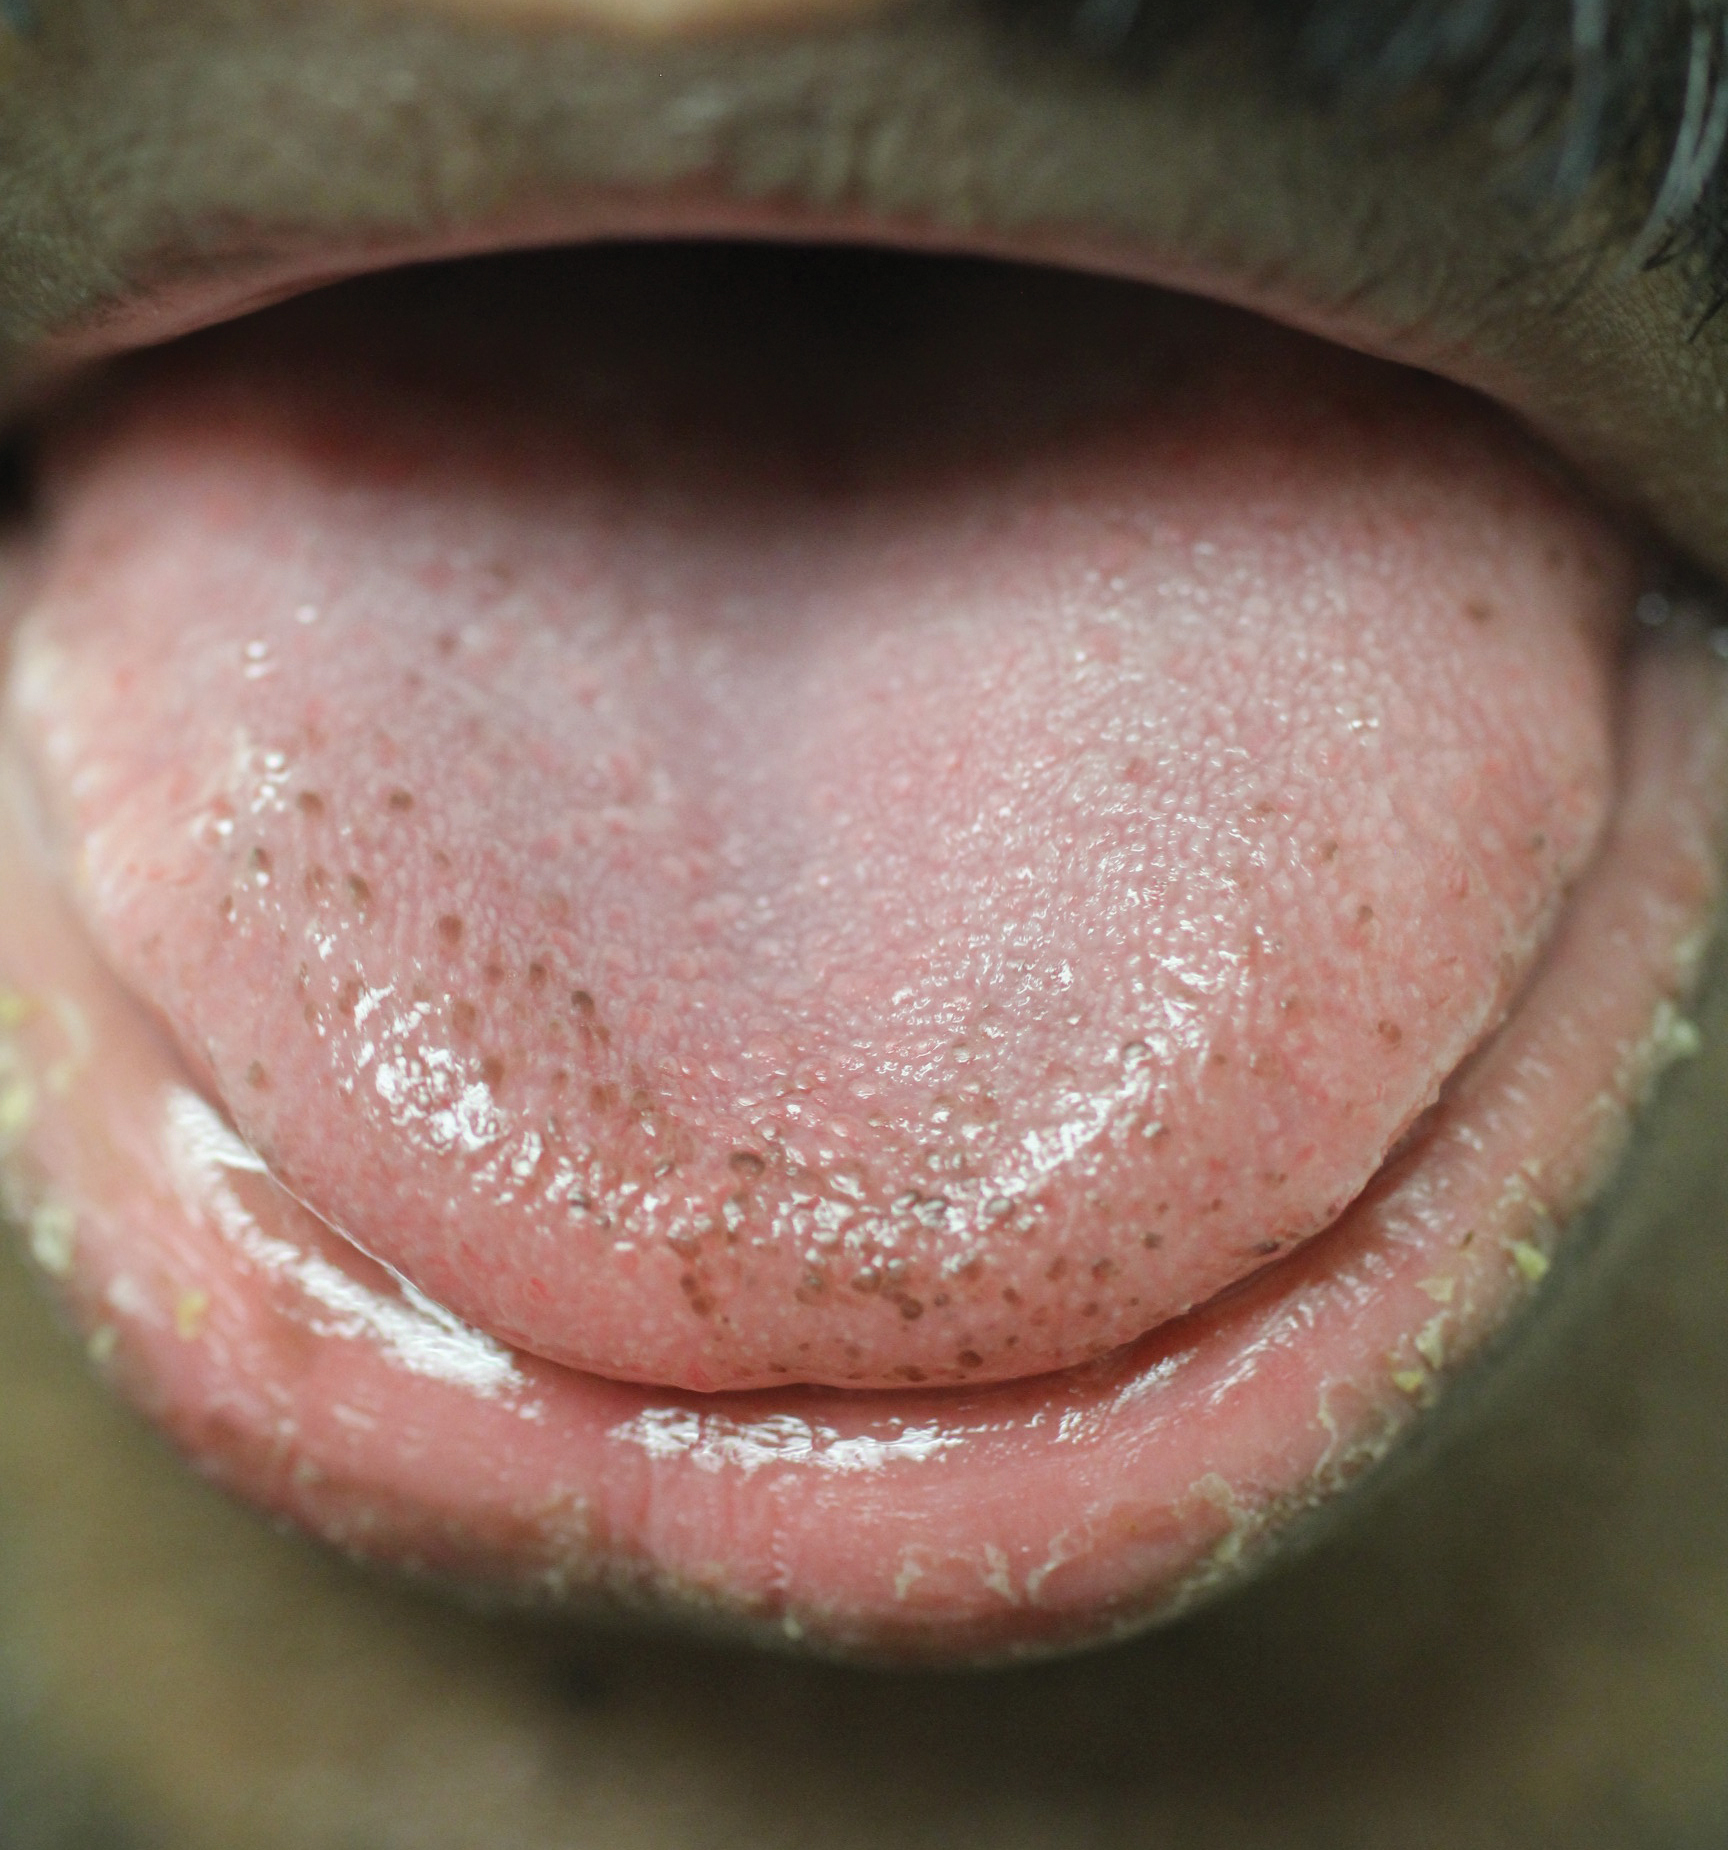 Enlarged tongue papillae treatment - Vallate papillae tongue treatment